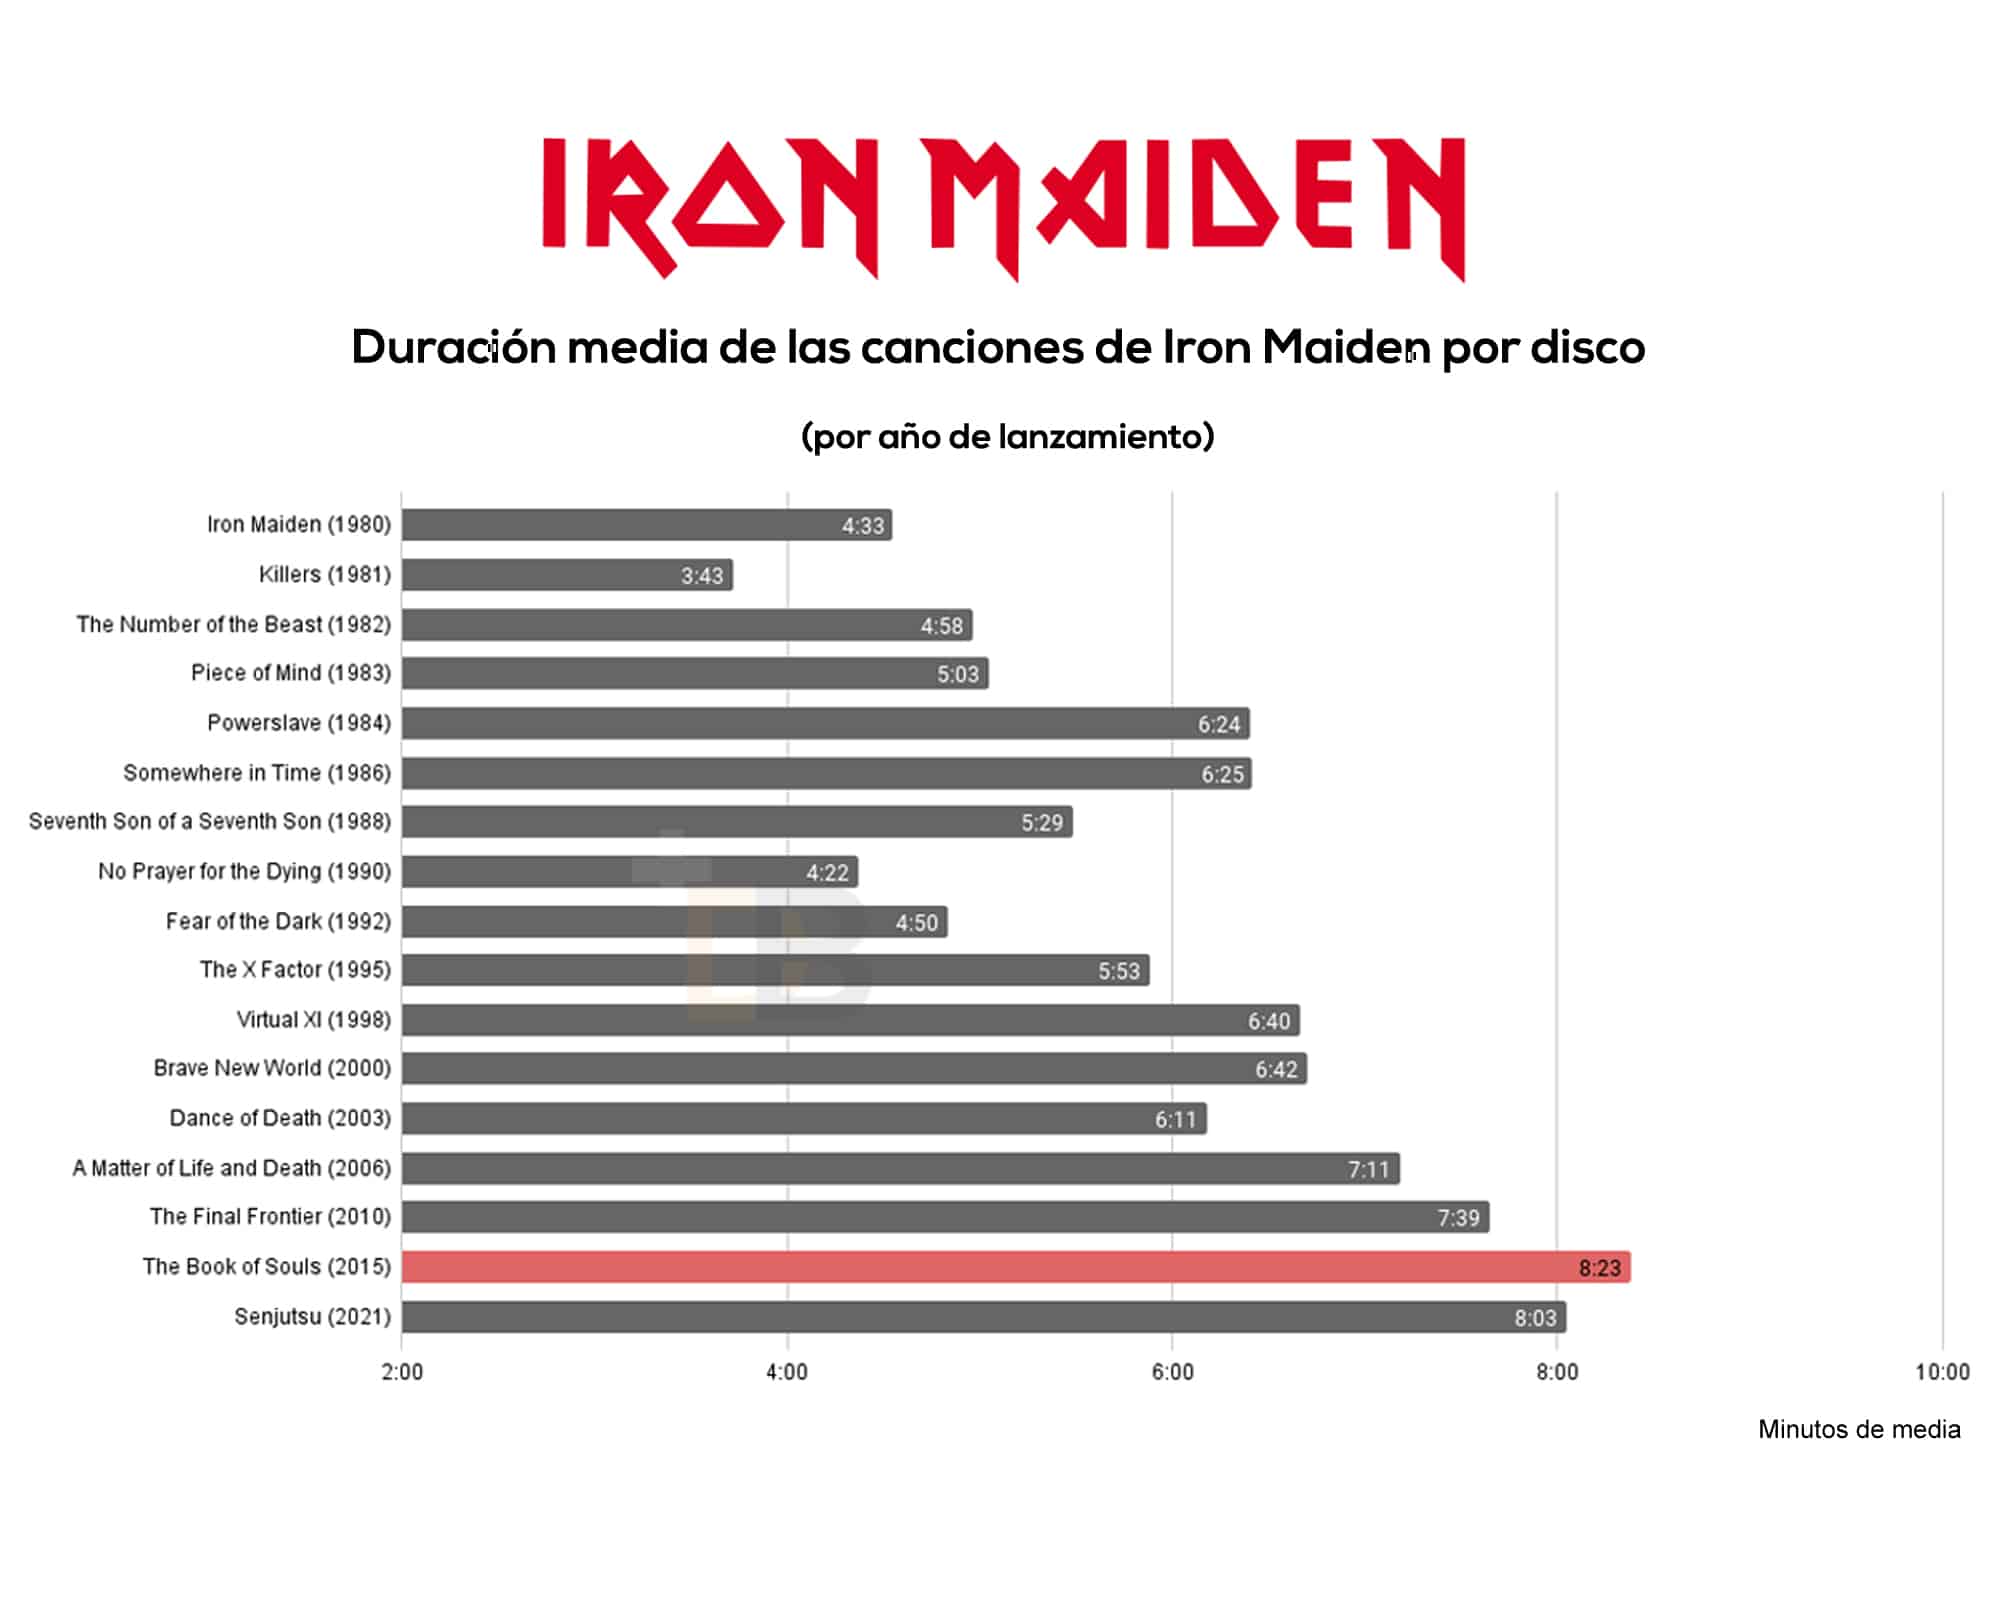 iron maiden duracion media ano grande